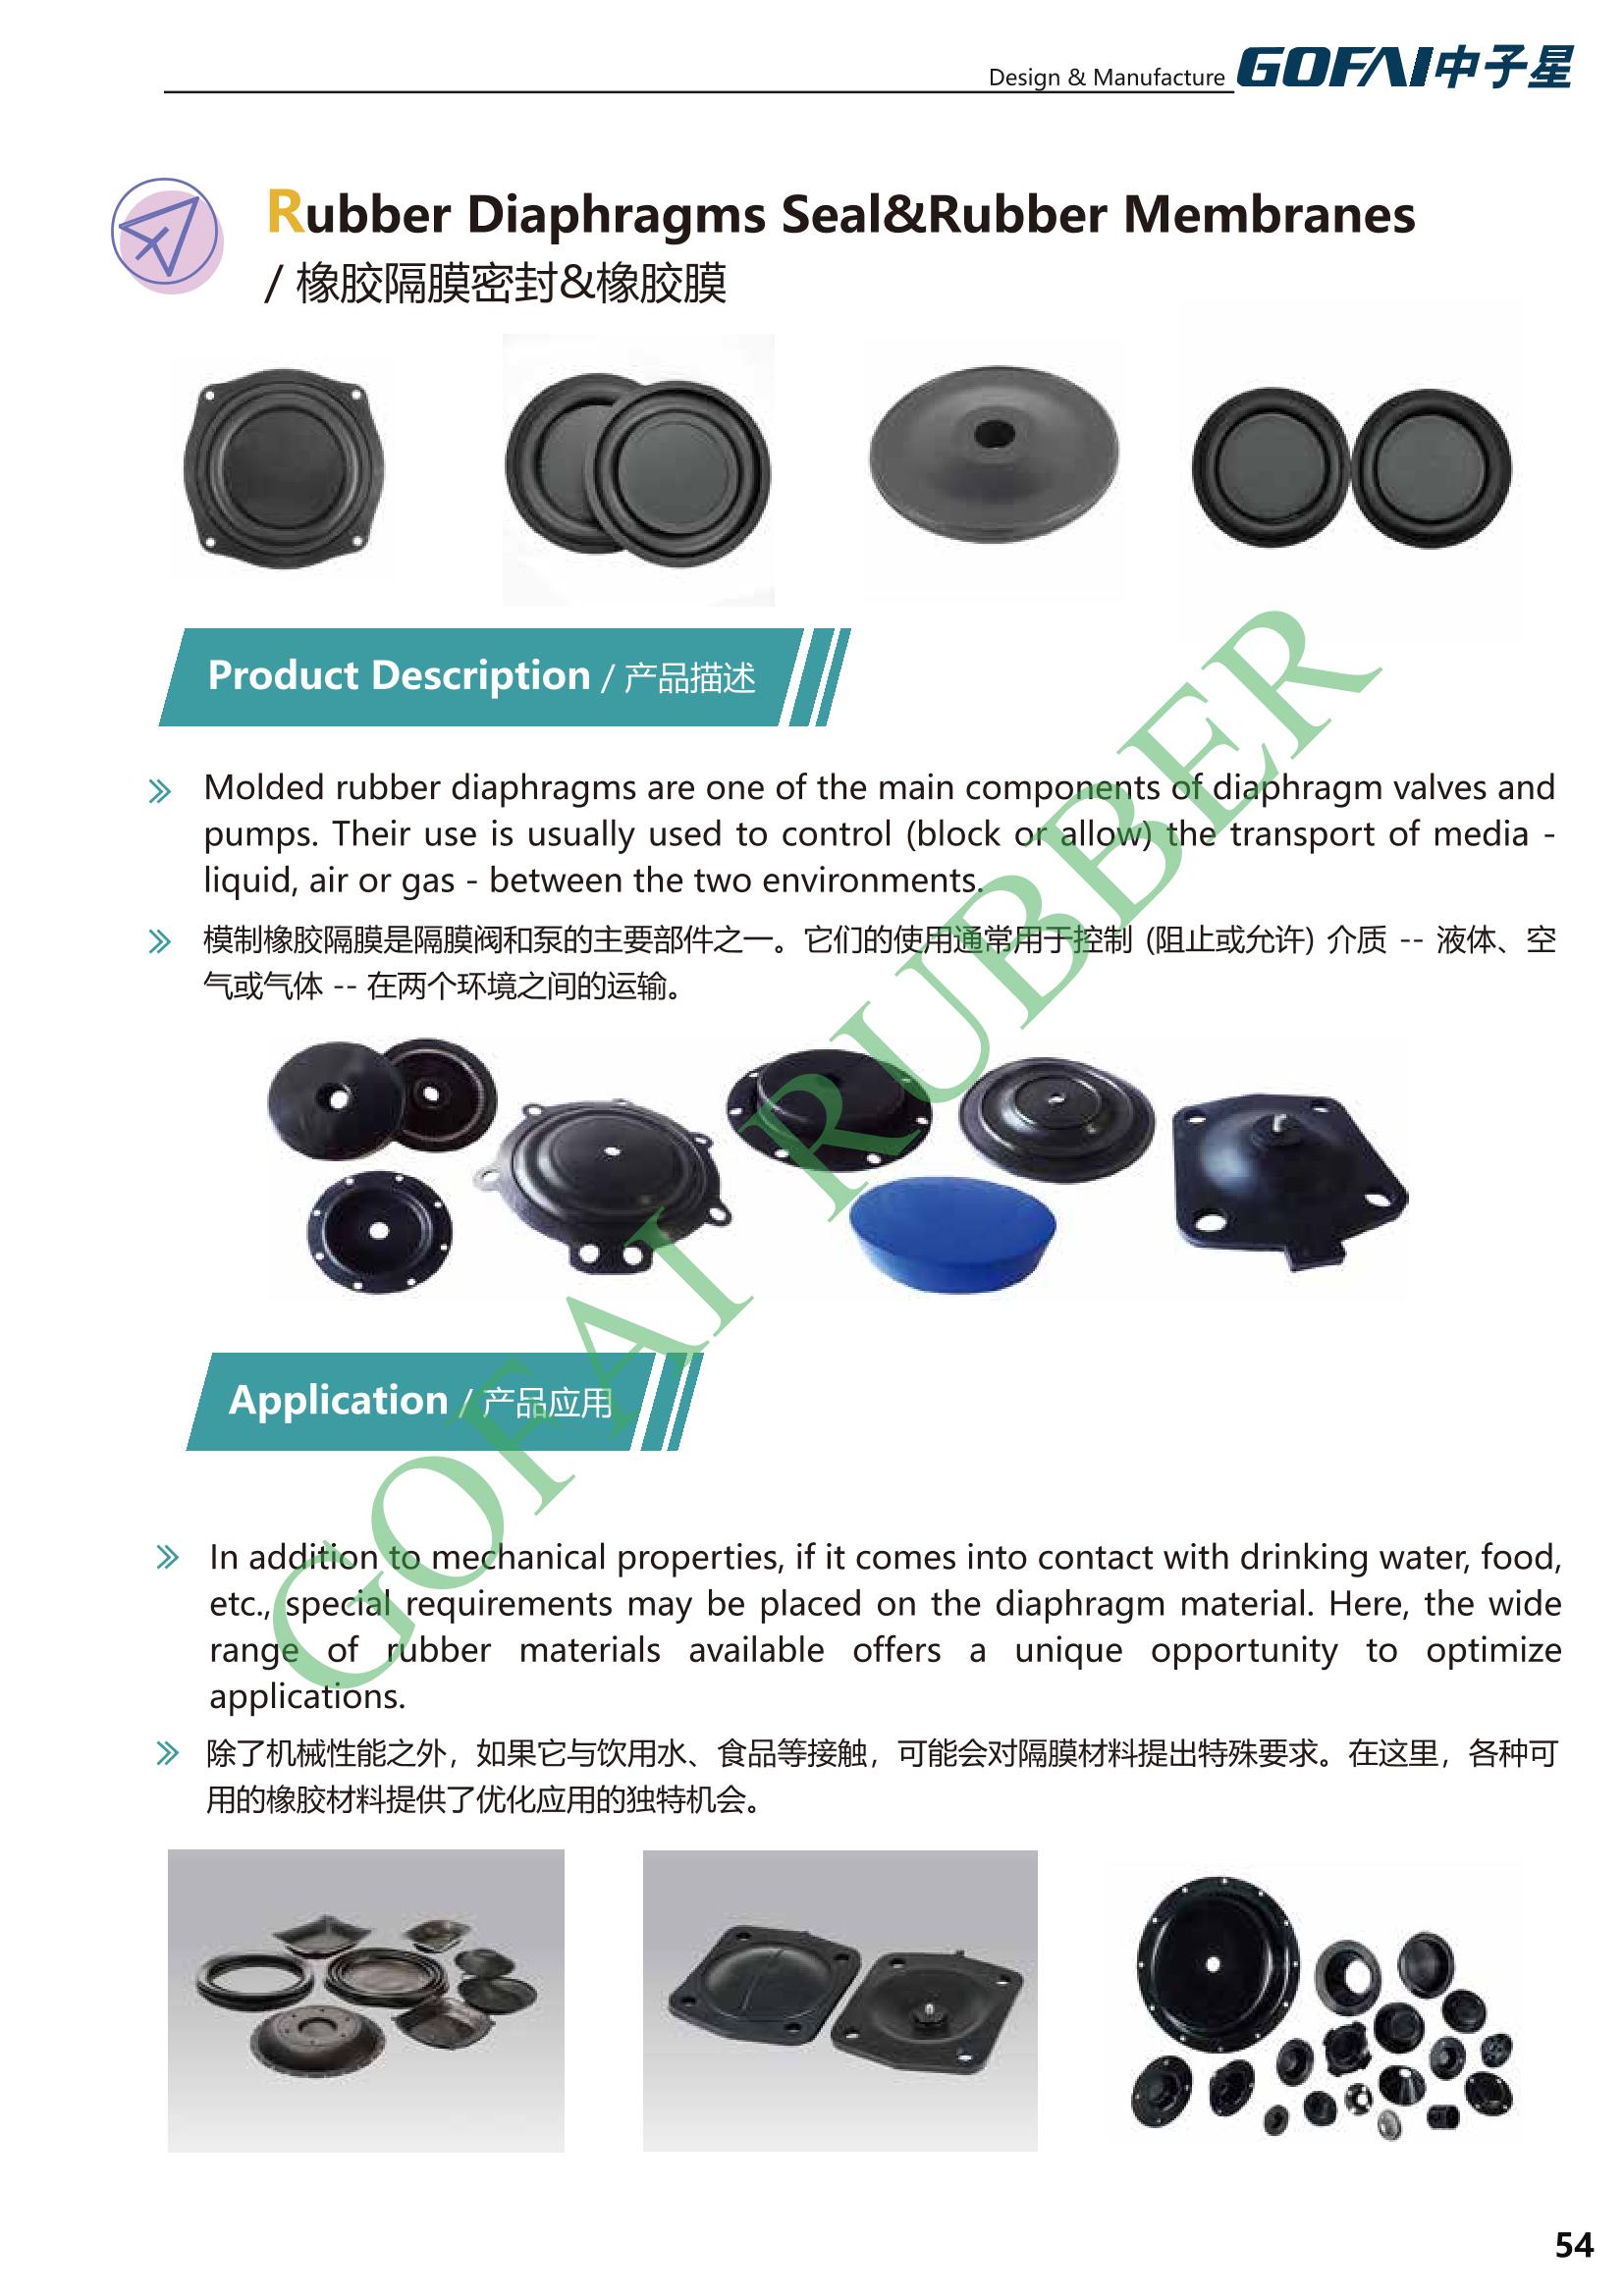 GOFAI rubberplastic products cataloge_54.jpg